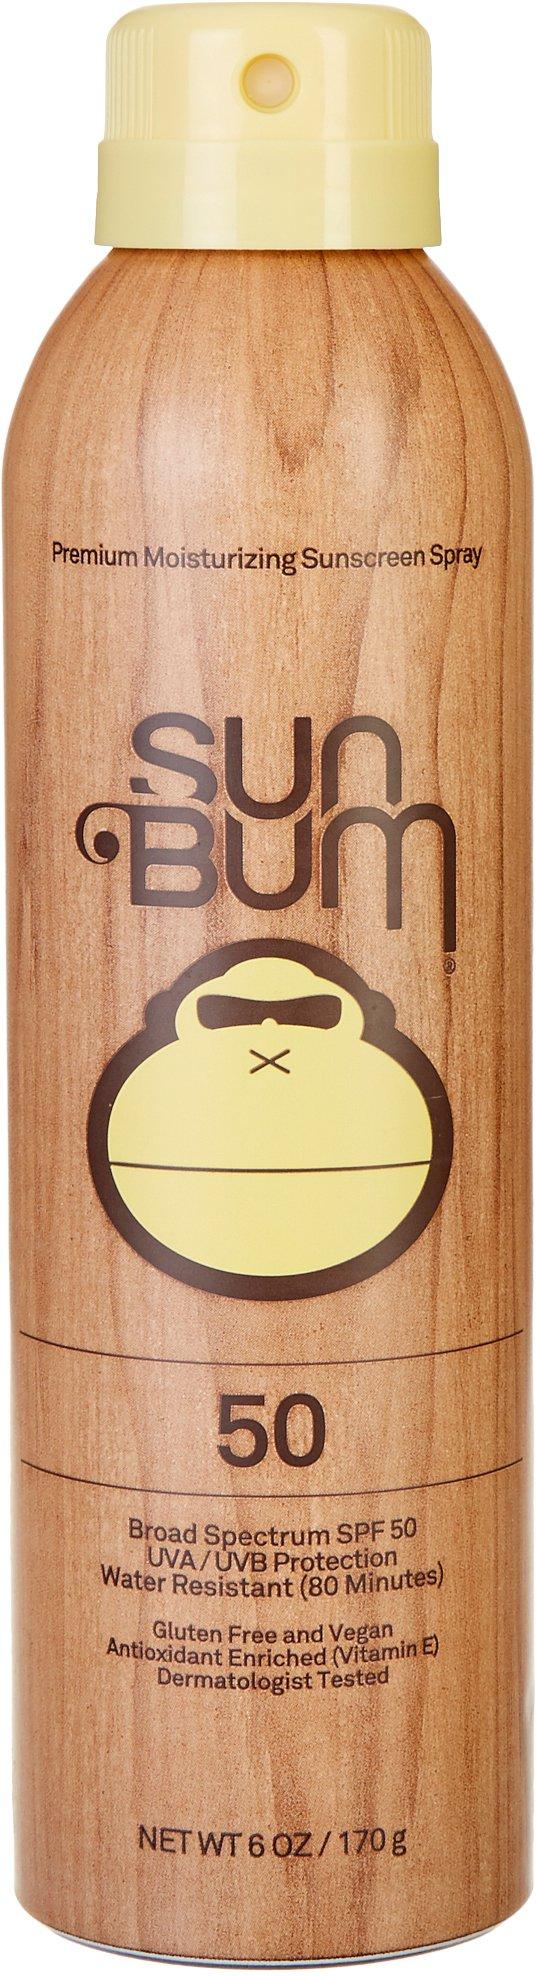 Sun Bum SPF 50 Premium Moisturizing Sunscreen Spray